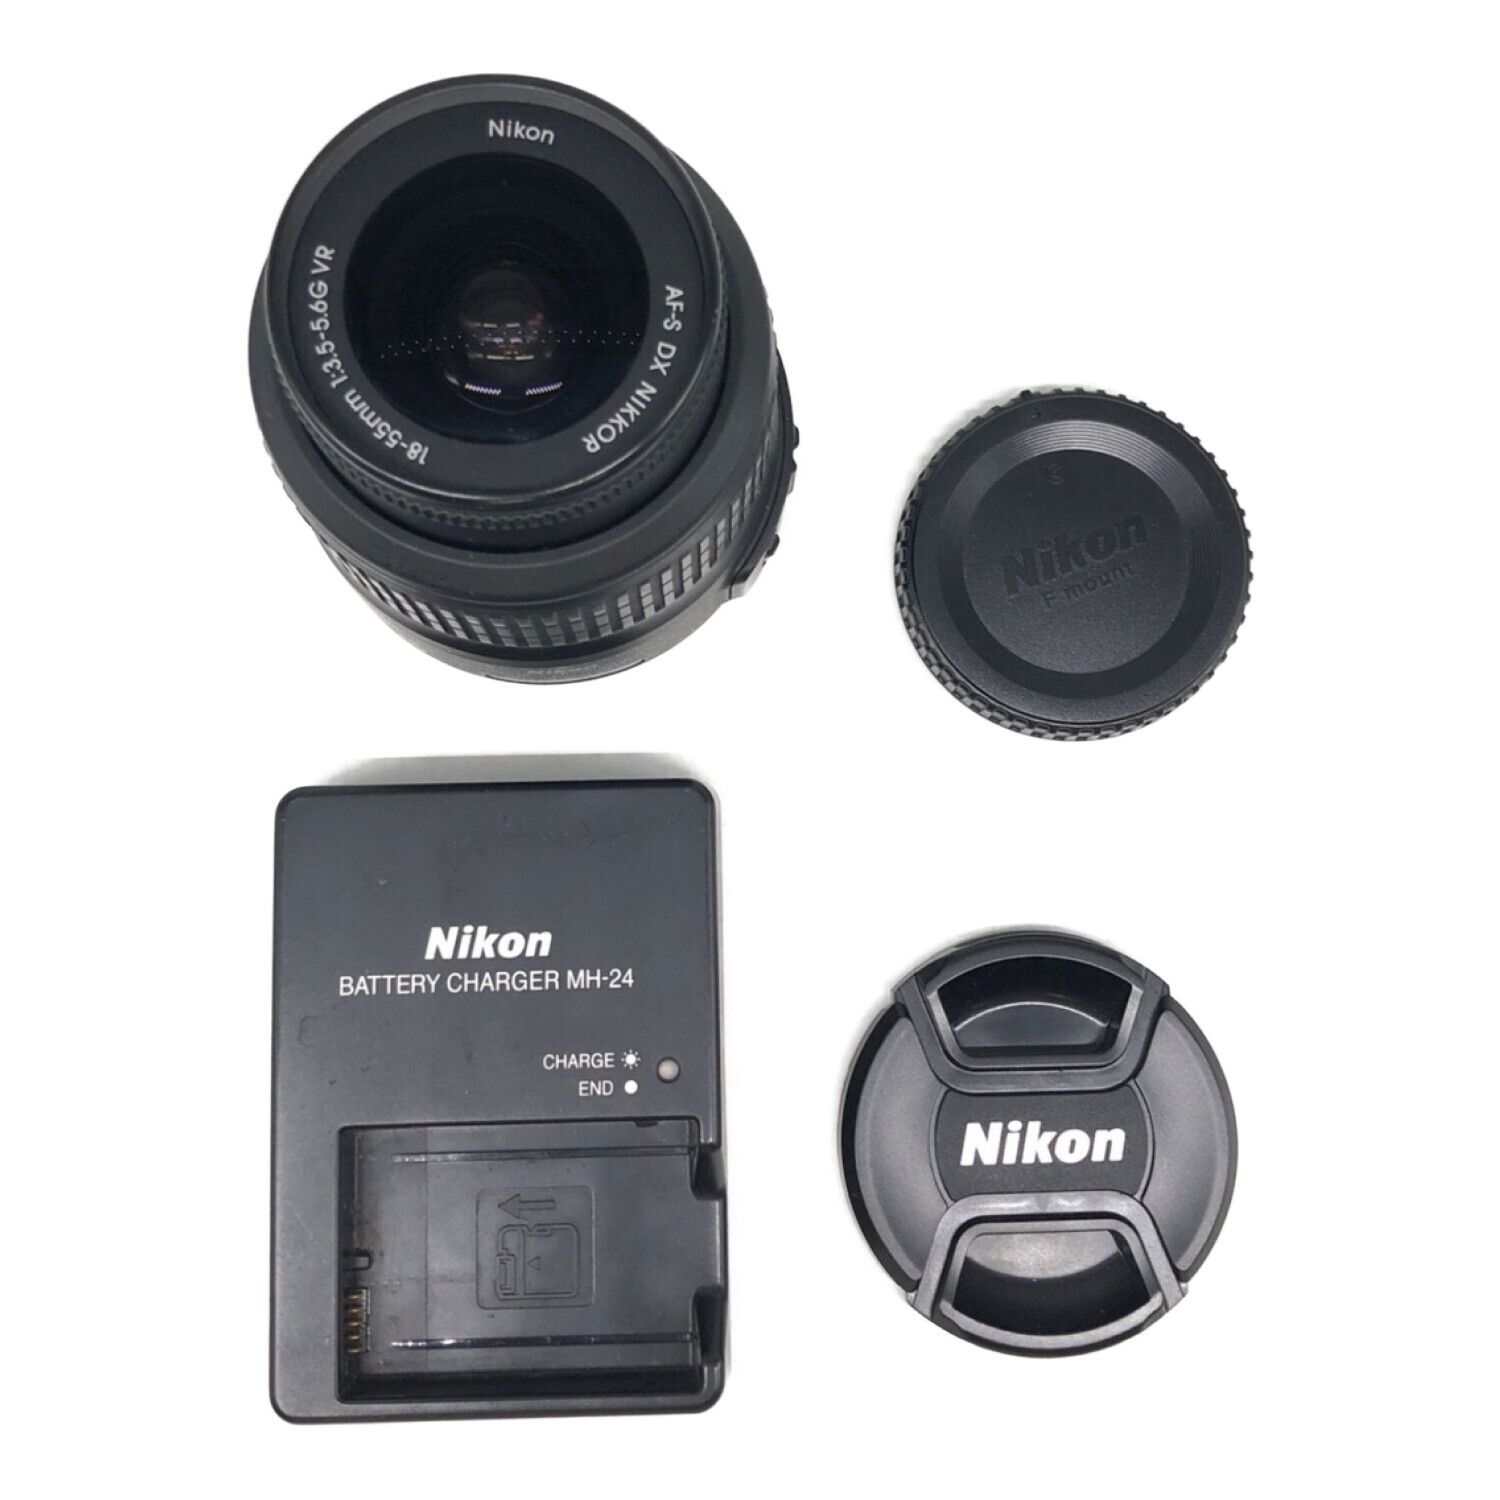 Nikon (ニコン) デジタル一眼レフカメラ D3100 1420万画素(有効画素